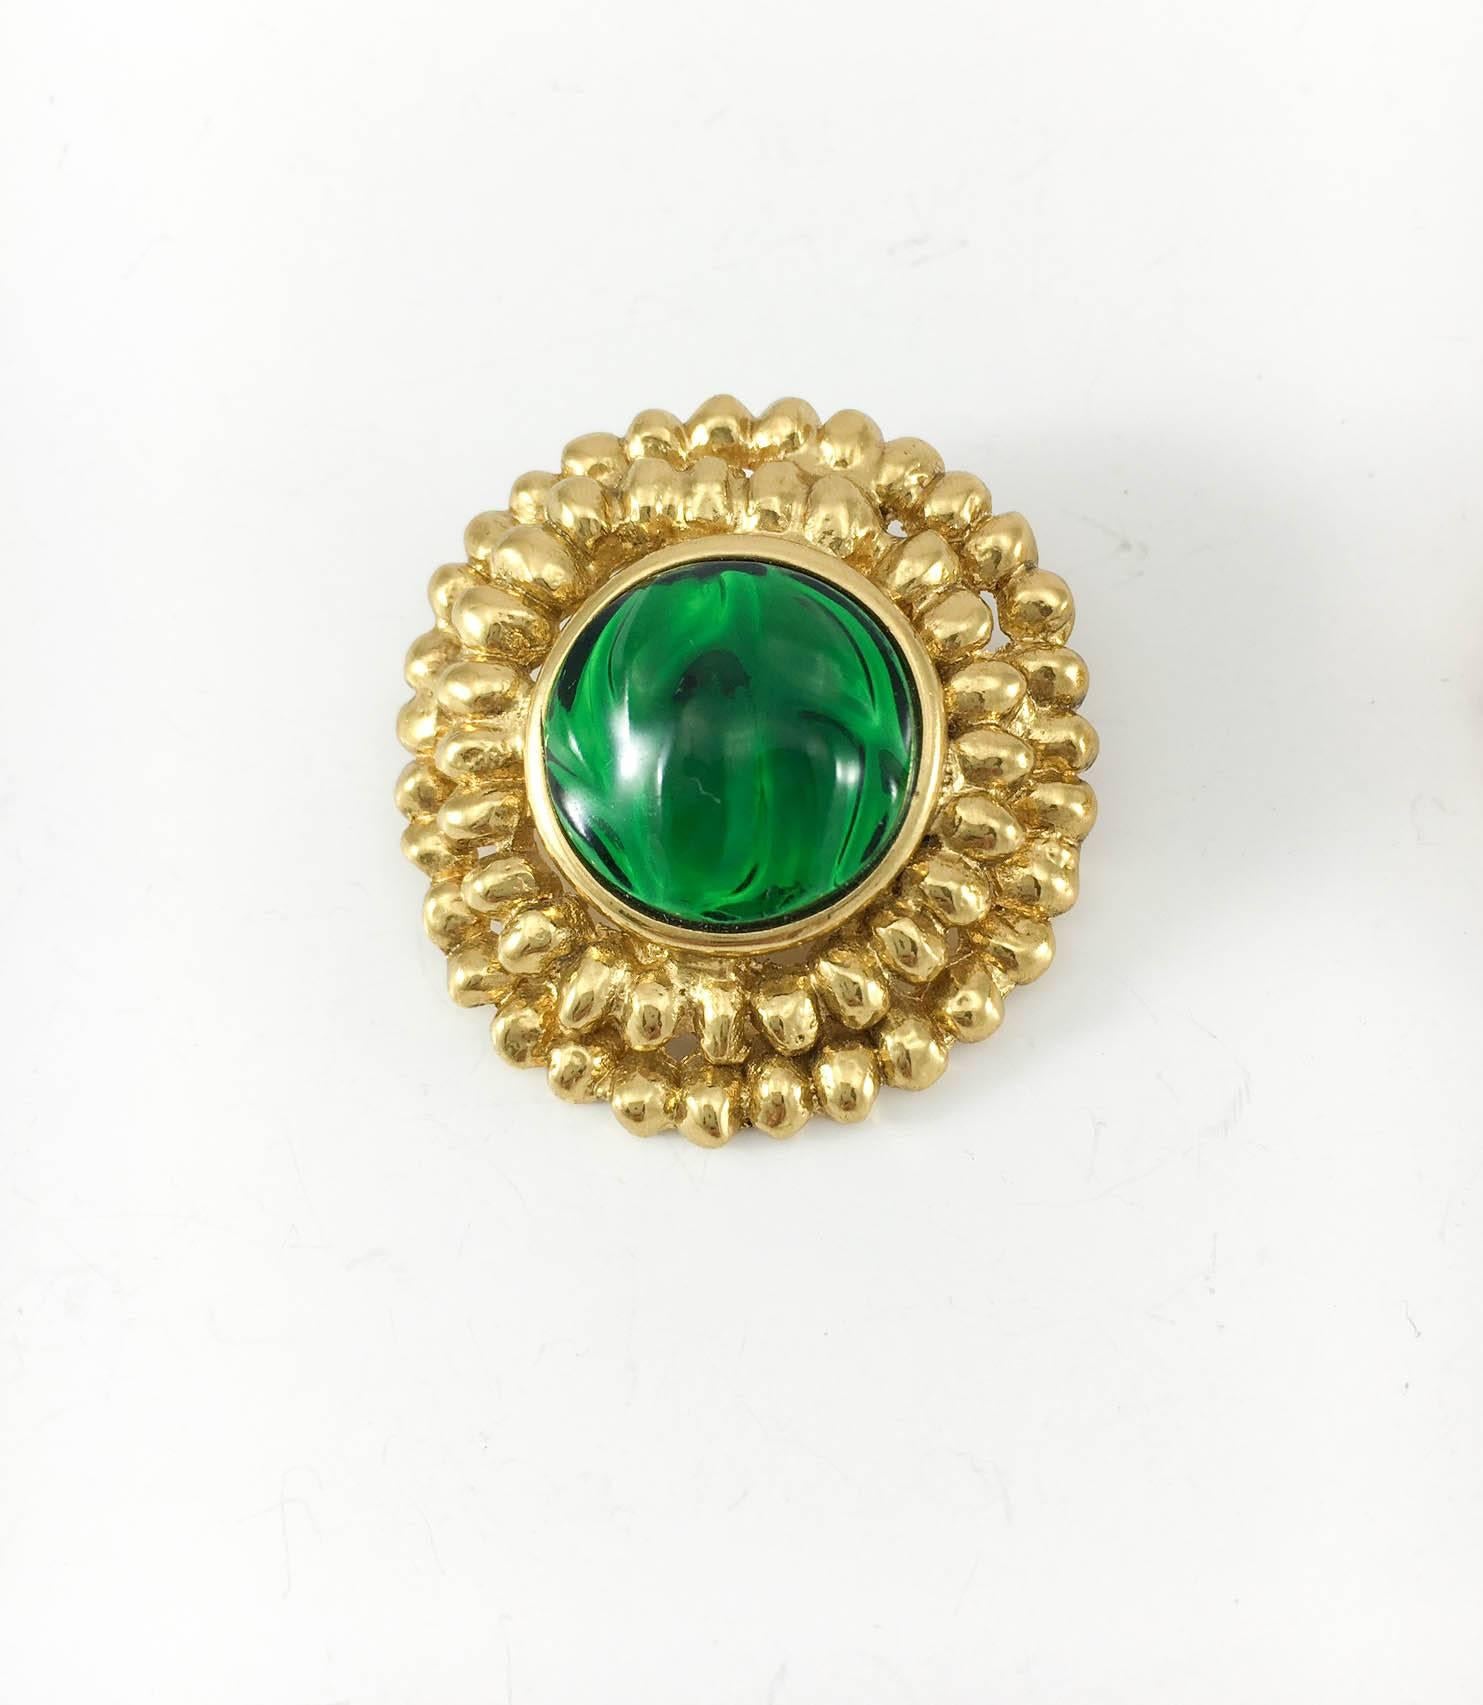 Yves Saint Laurent Green Gripoix Gold-Plated Earrings, by Goossens - 1980s 1